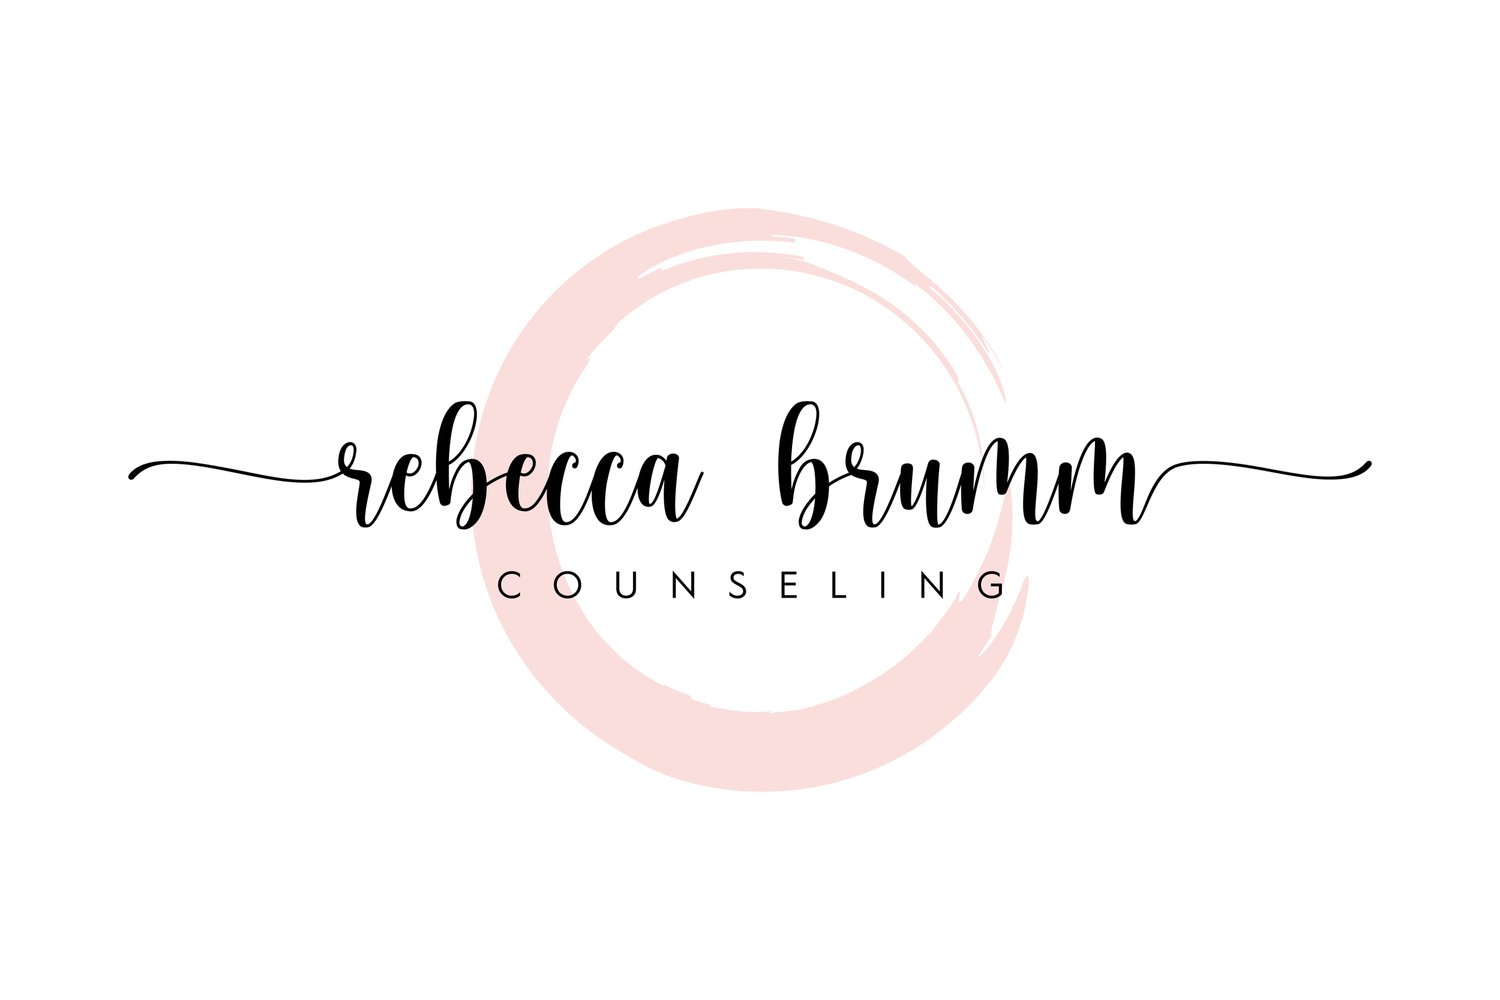 Rebecca Brumm Counseling